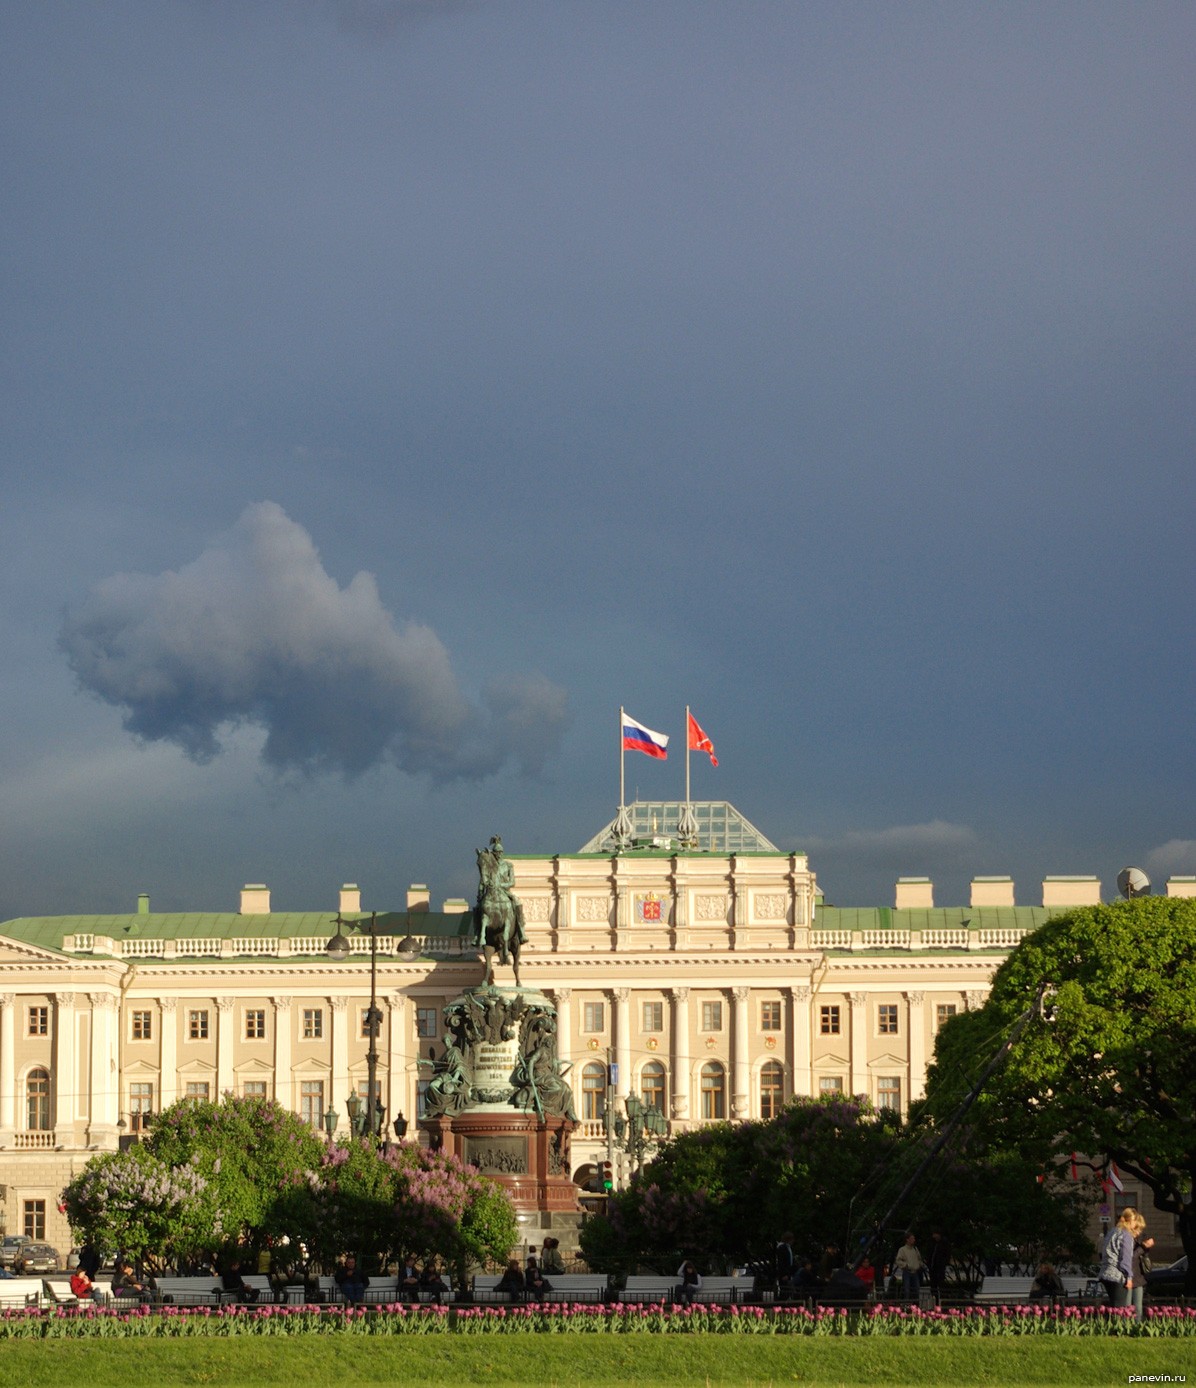  дворец фото - Санкт-Петербург, спб - Фотографии и .